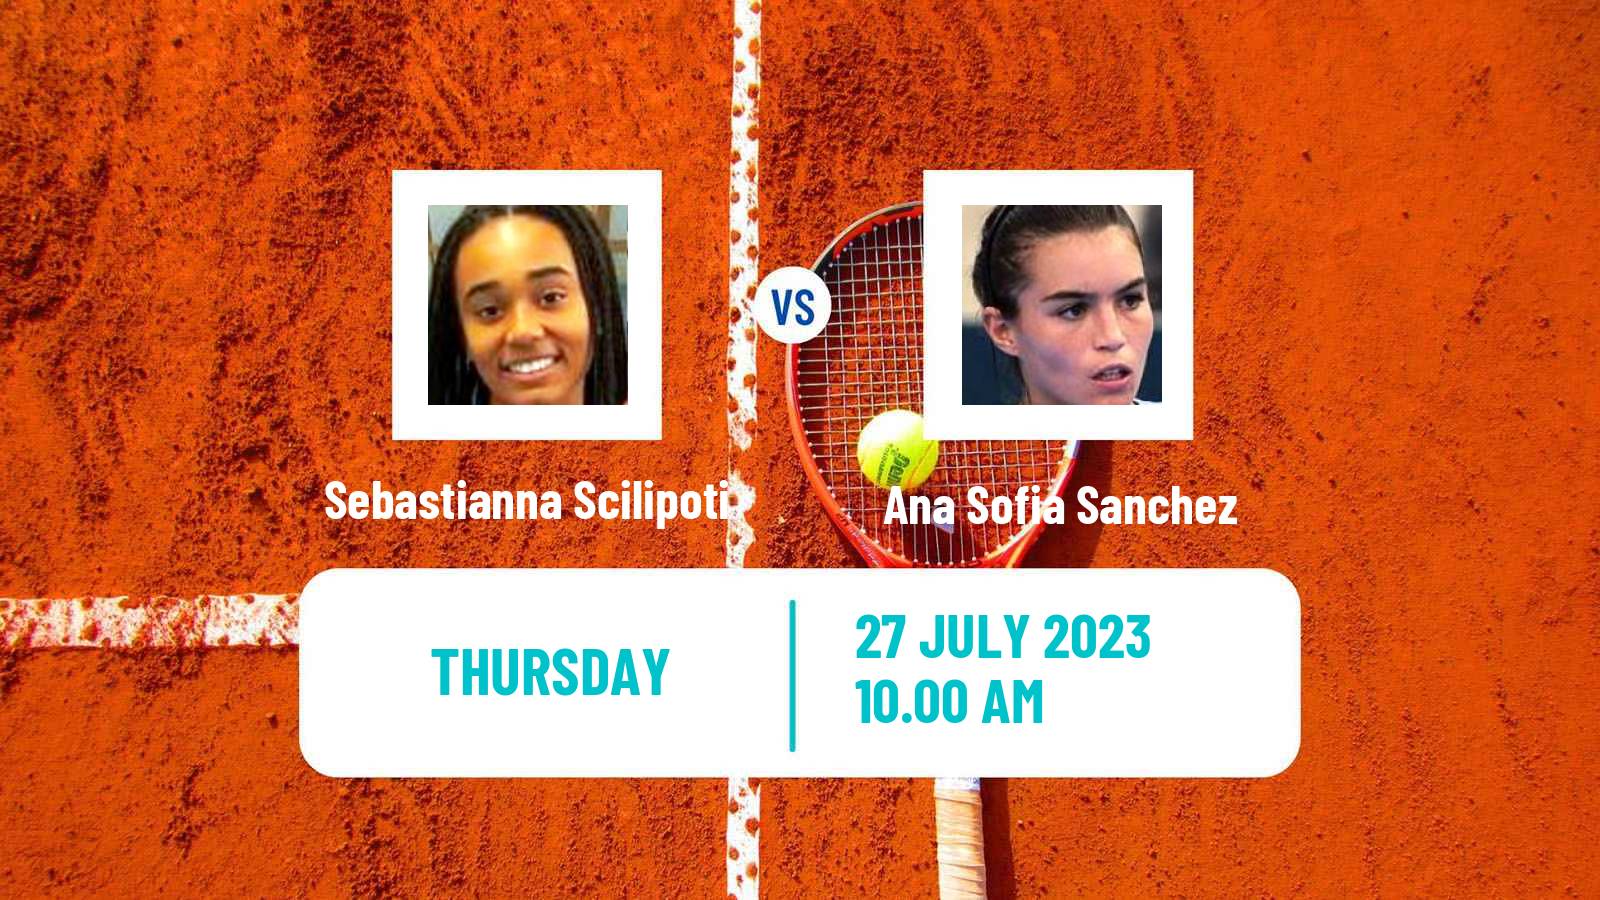 Tennis ITF W25 El Espinar Segovia Women Sebastianna Scilipoti - Ana Sofia Sanchez